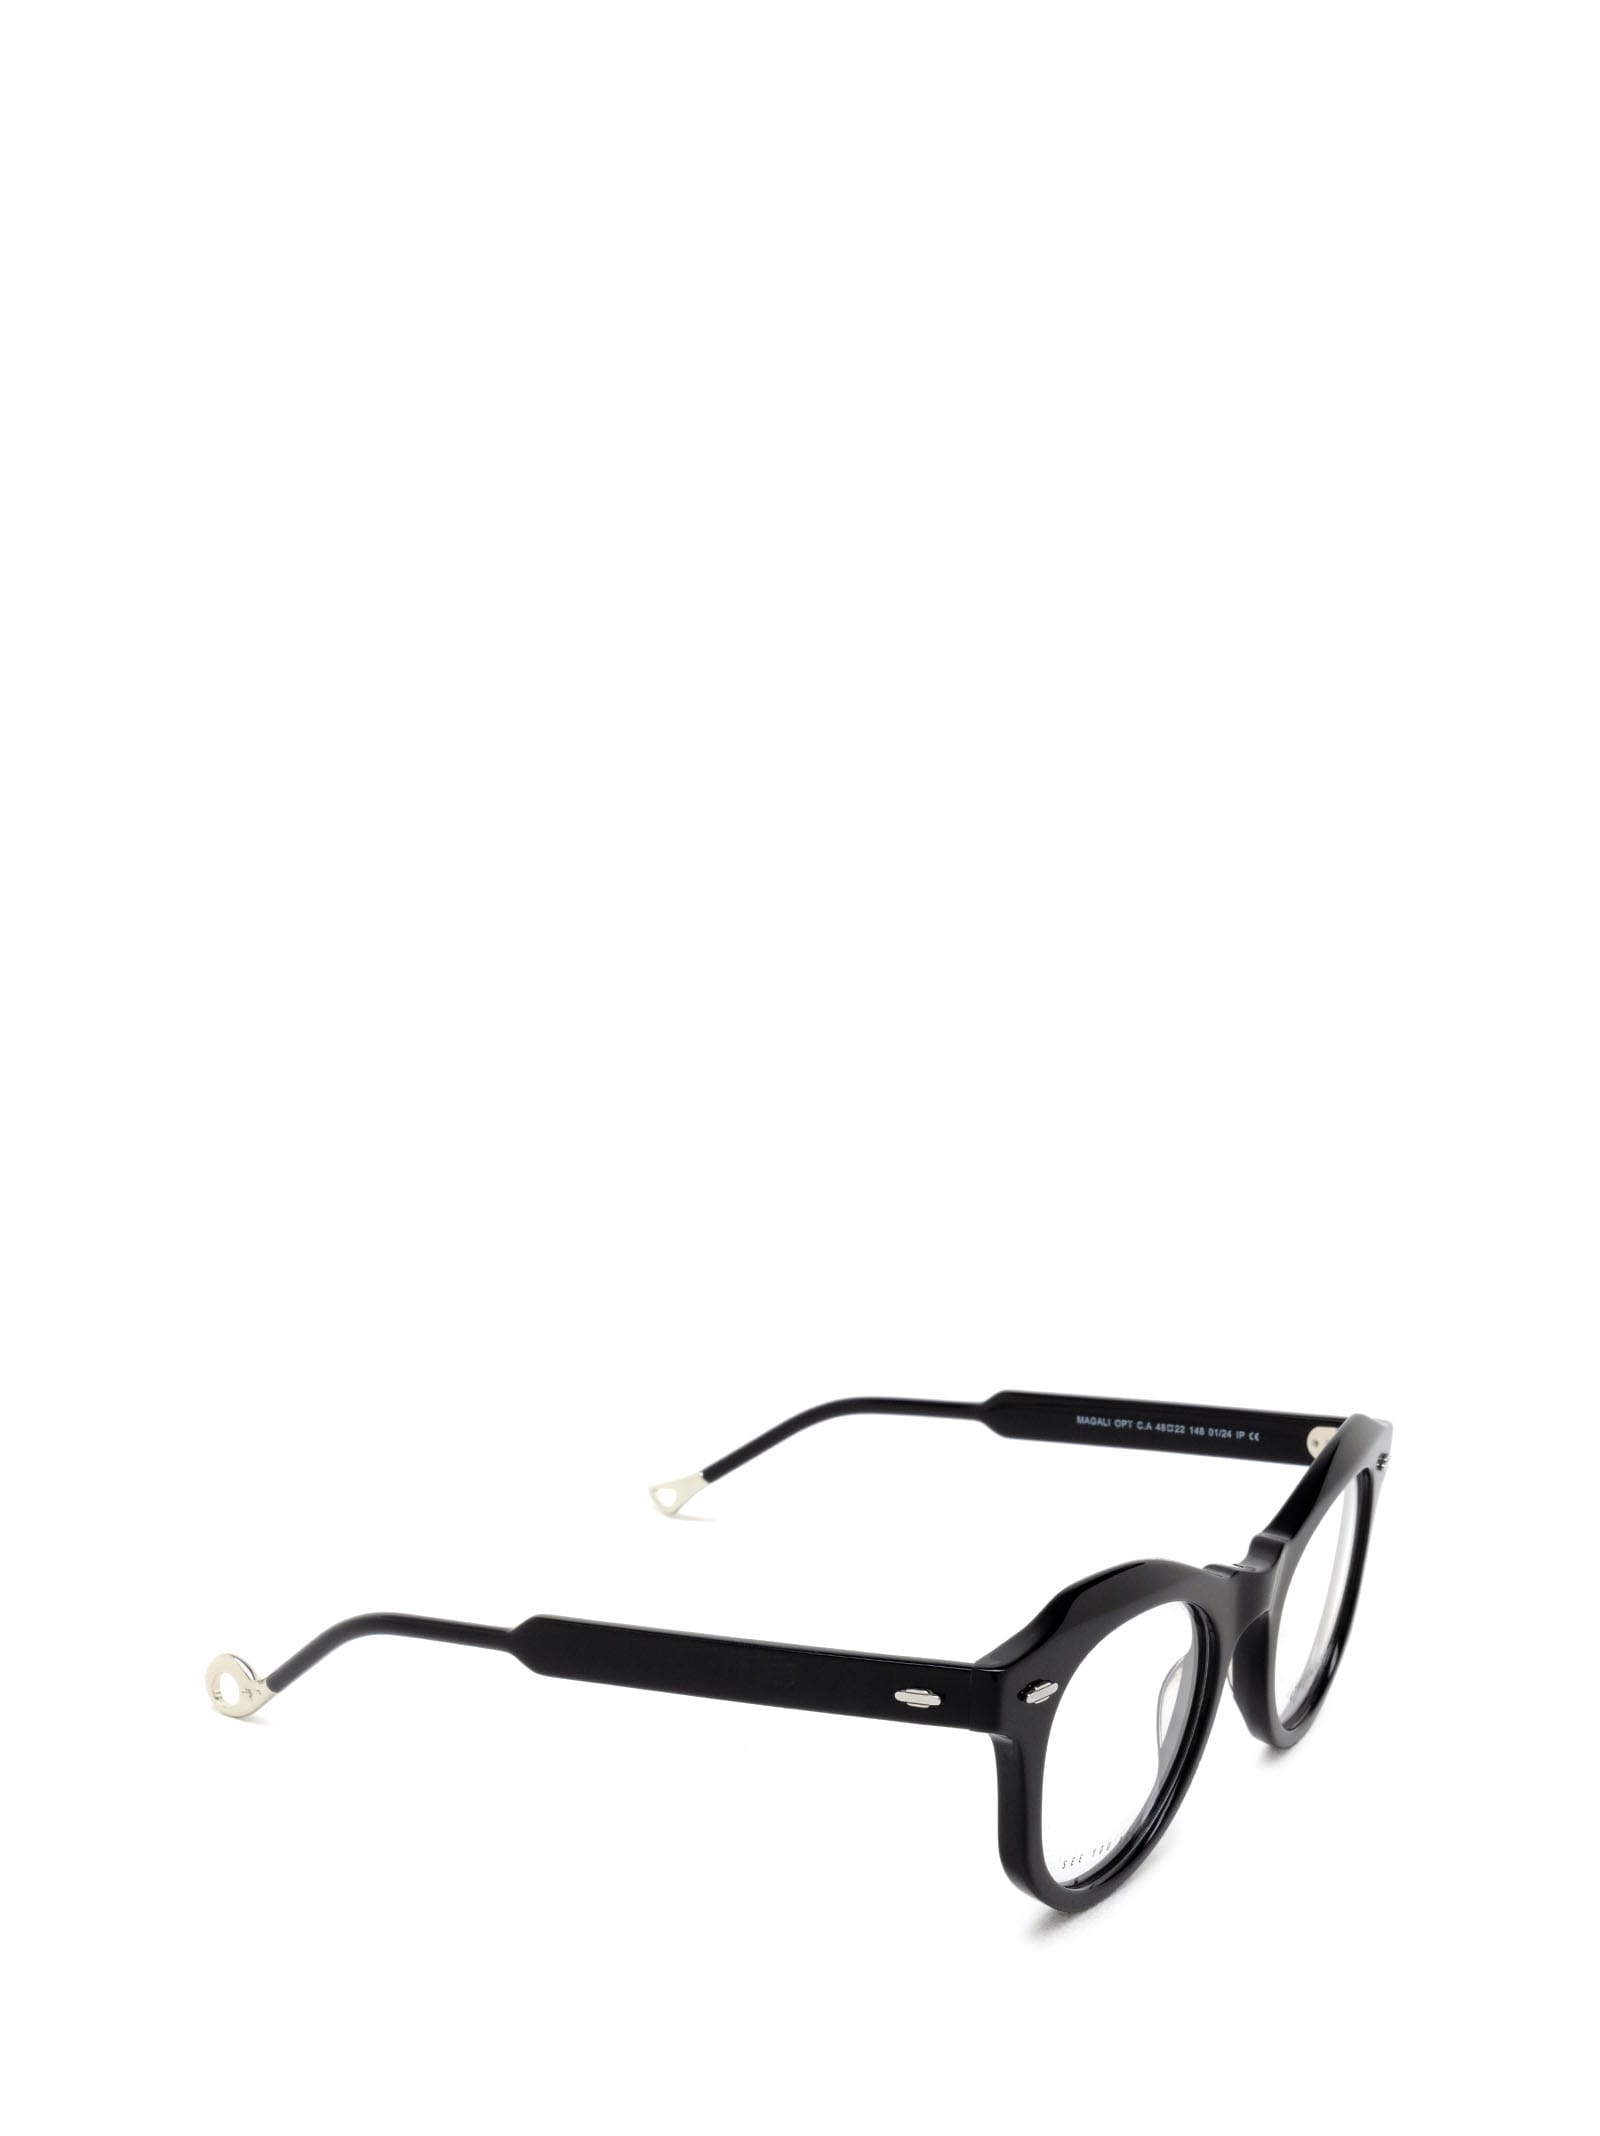 Shop Eyepetizer Magali Opt Black Glasses